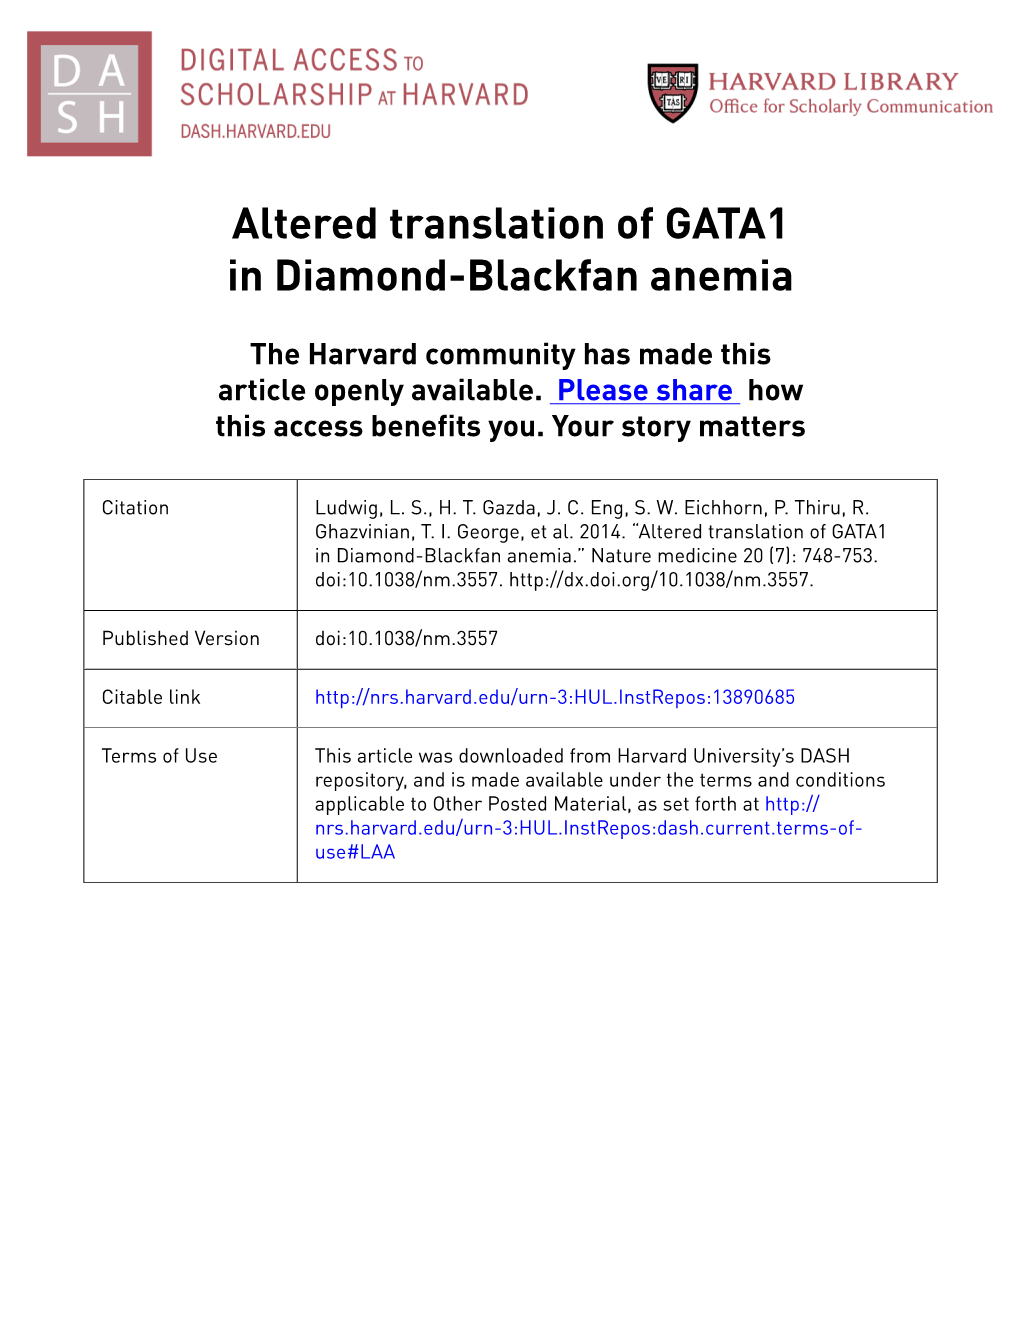 Altered Translation of GATA1 in Diamond-Blackfan Anemia